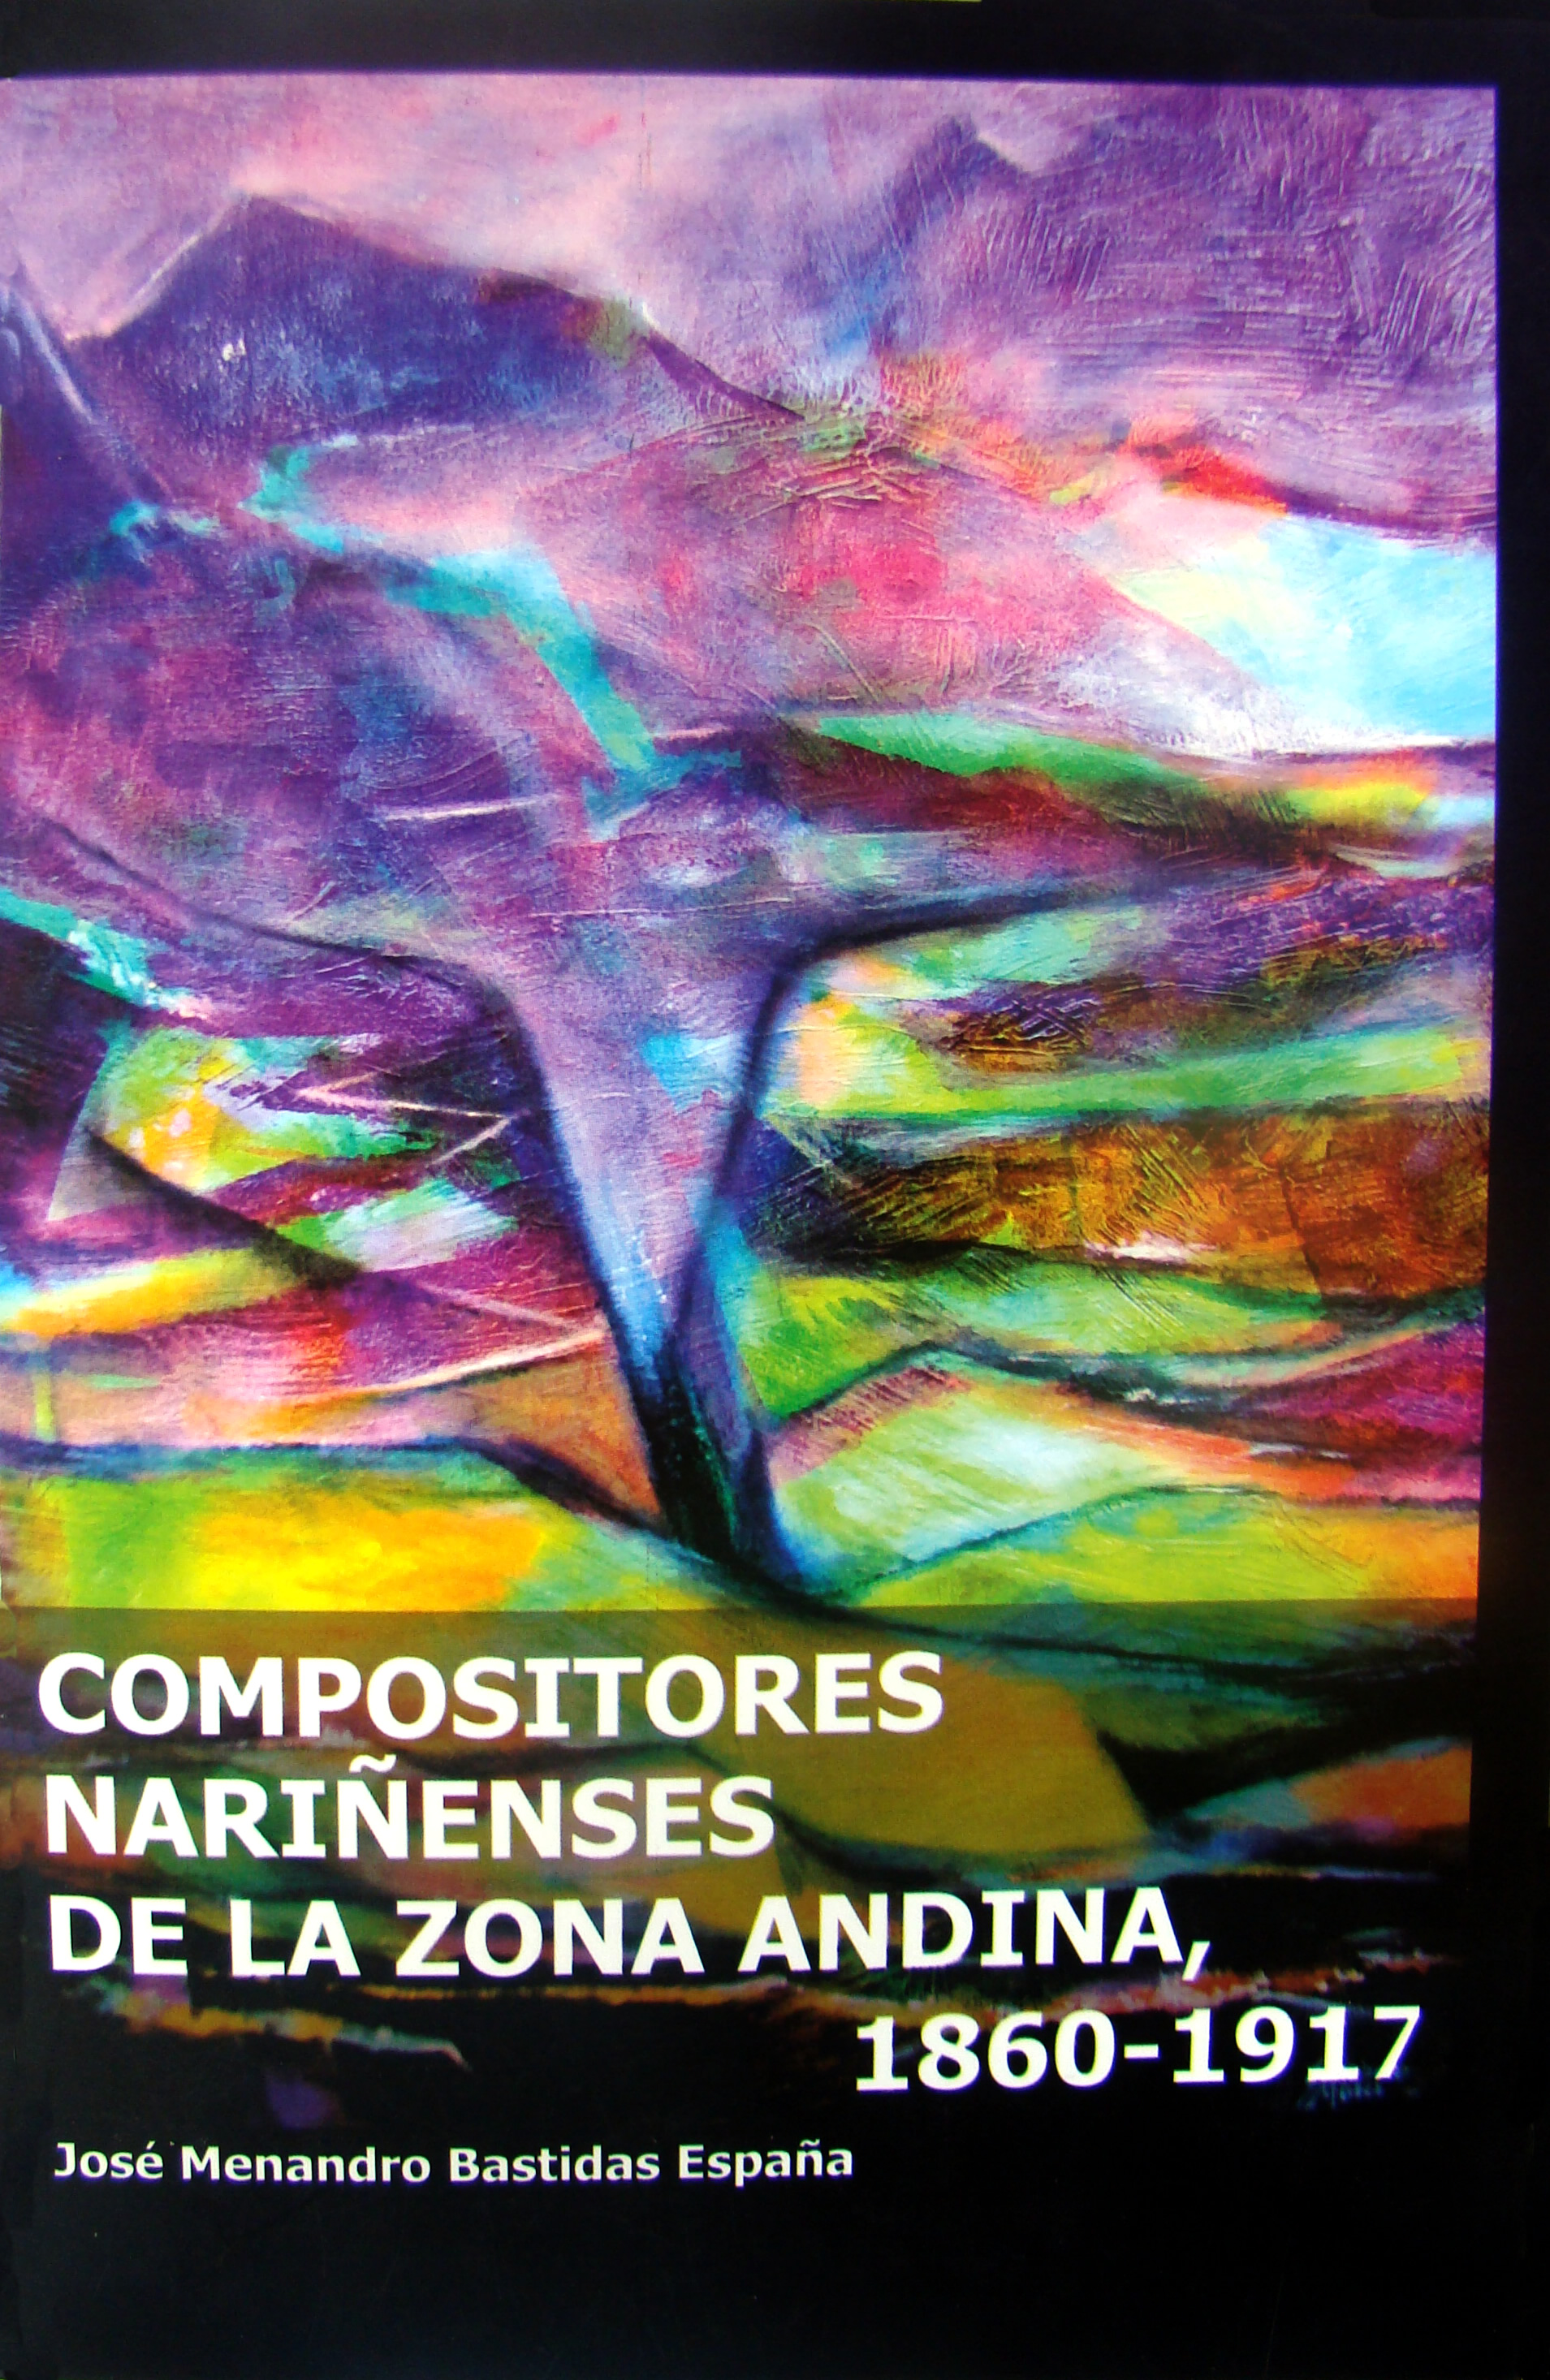 Compositores nariñenses de la zona andina 1860 -1917